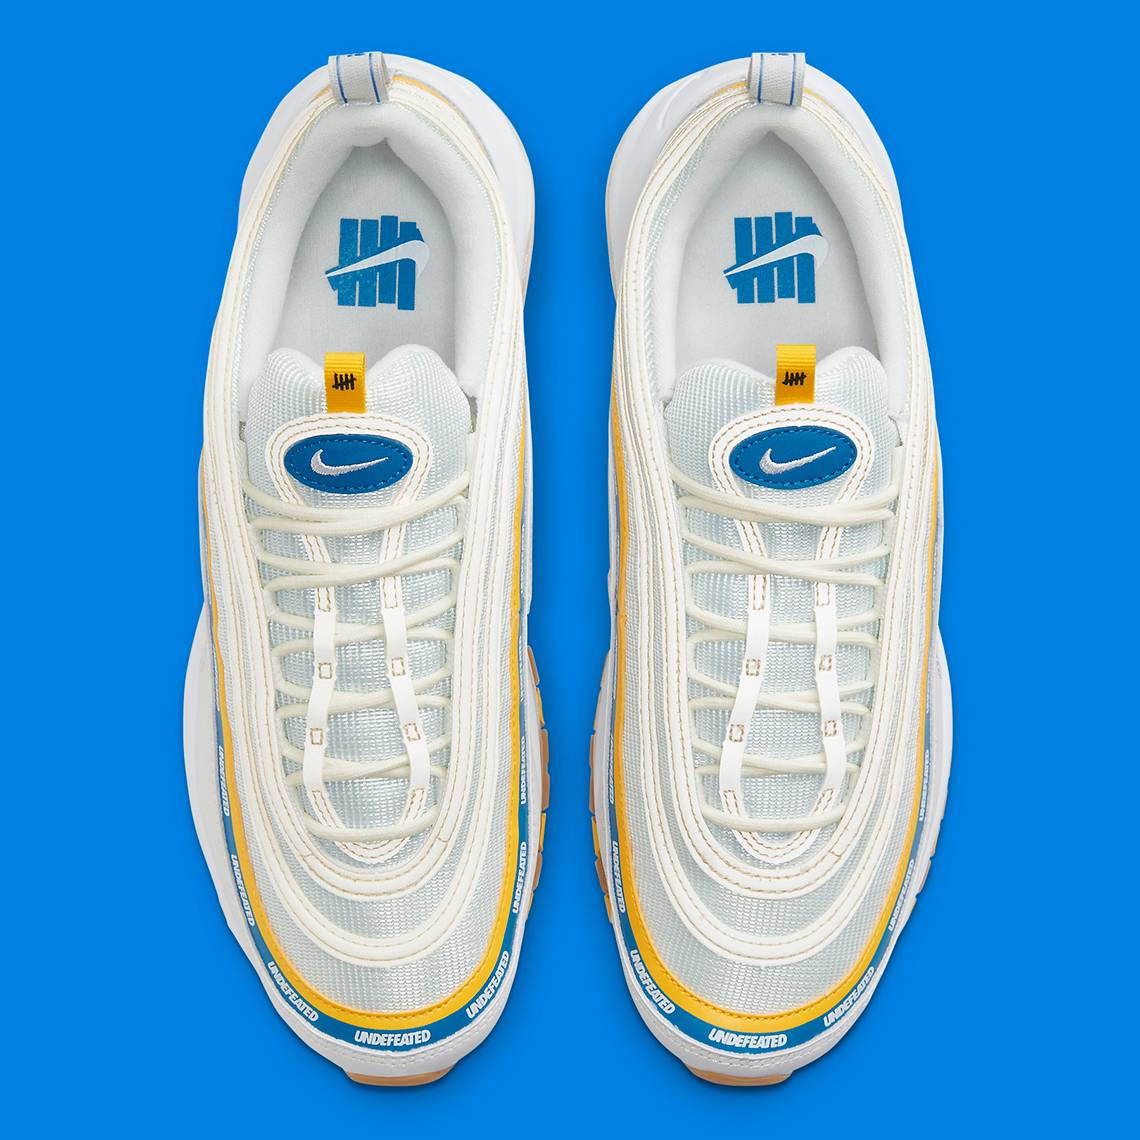 UNDEFEATED 與 Nike Air Max 97新色「UCLA」預覽！簡約明亮色調極注目